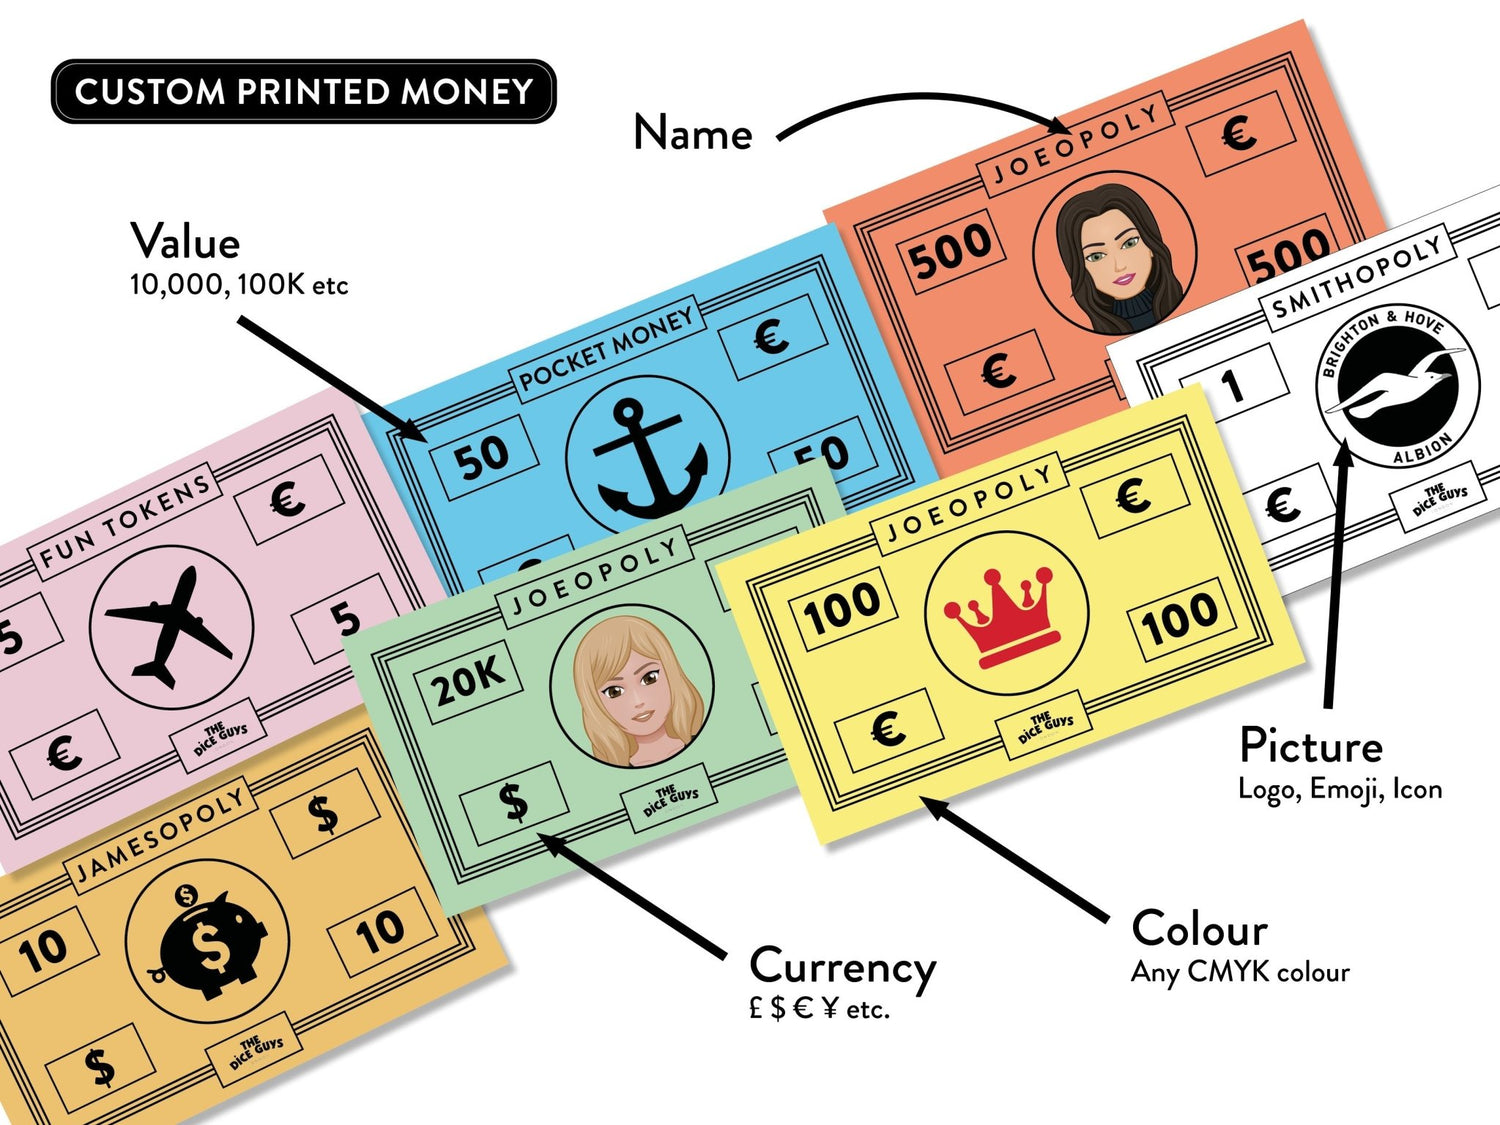 Custom Money for Monopoly Board